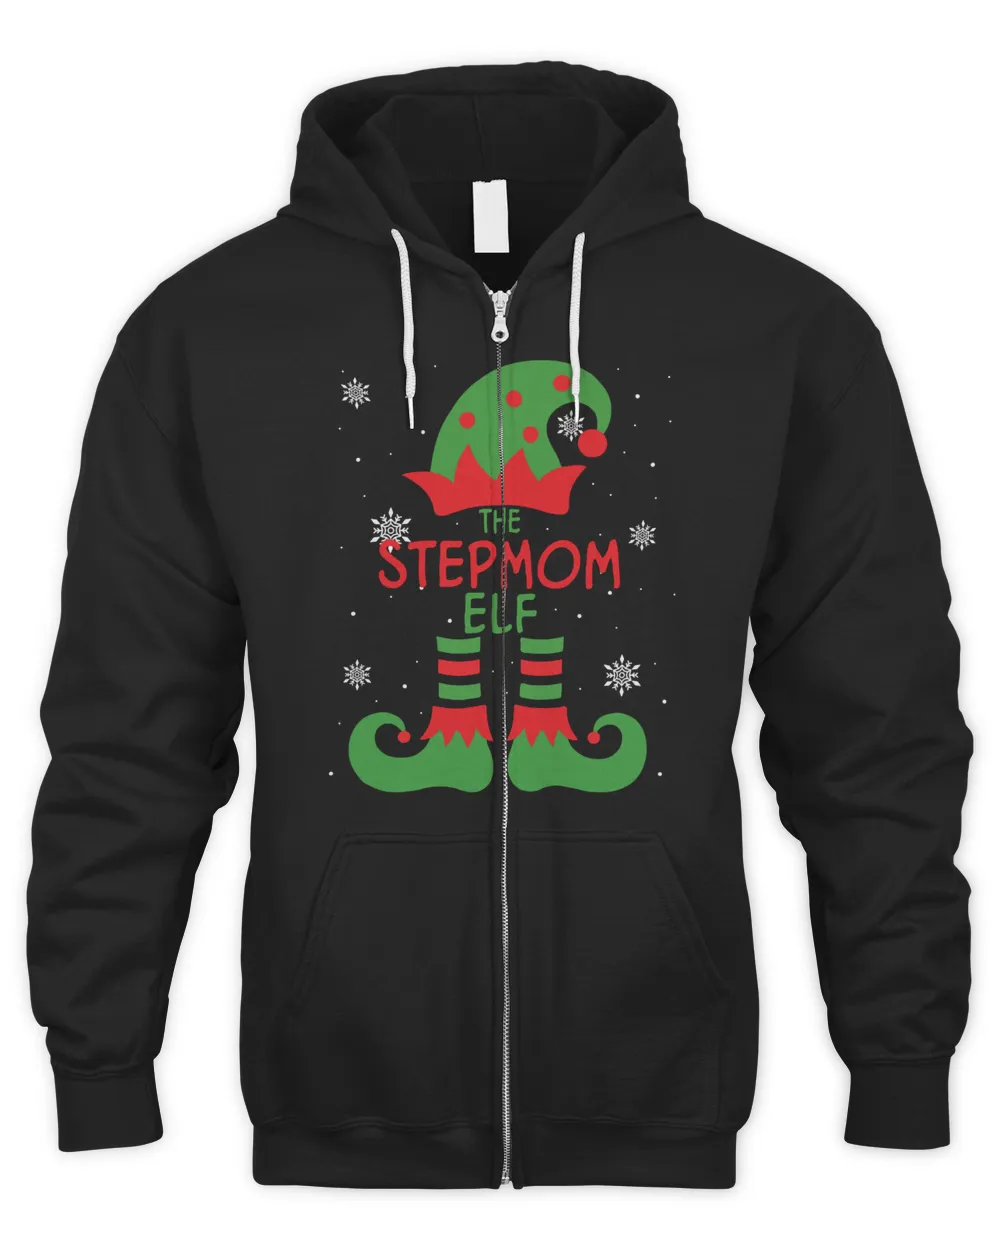 Stepmom Gifts Matching Family Funny Xmas The Stepmom ELF Christmas PJS Group